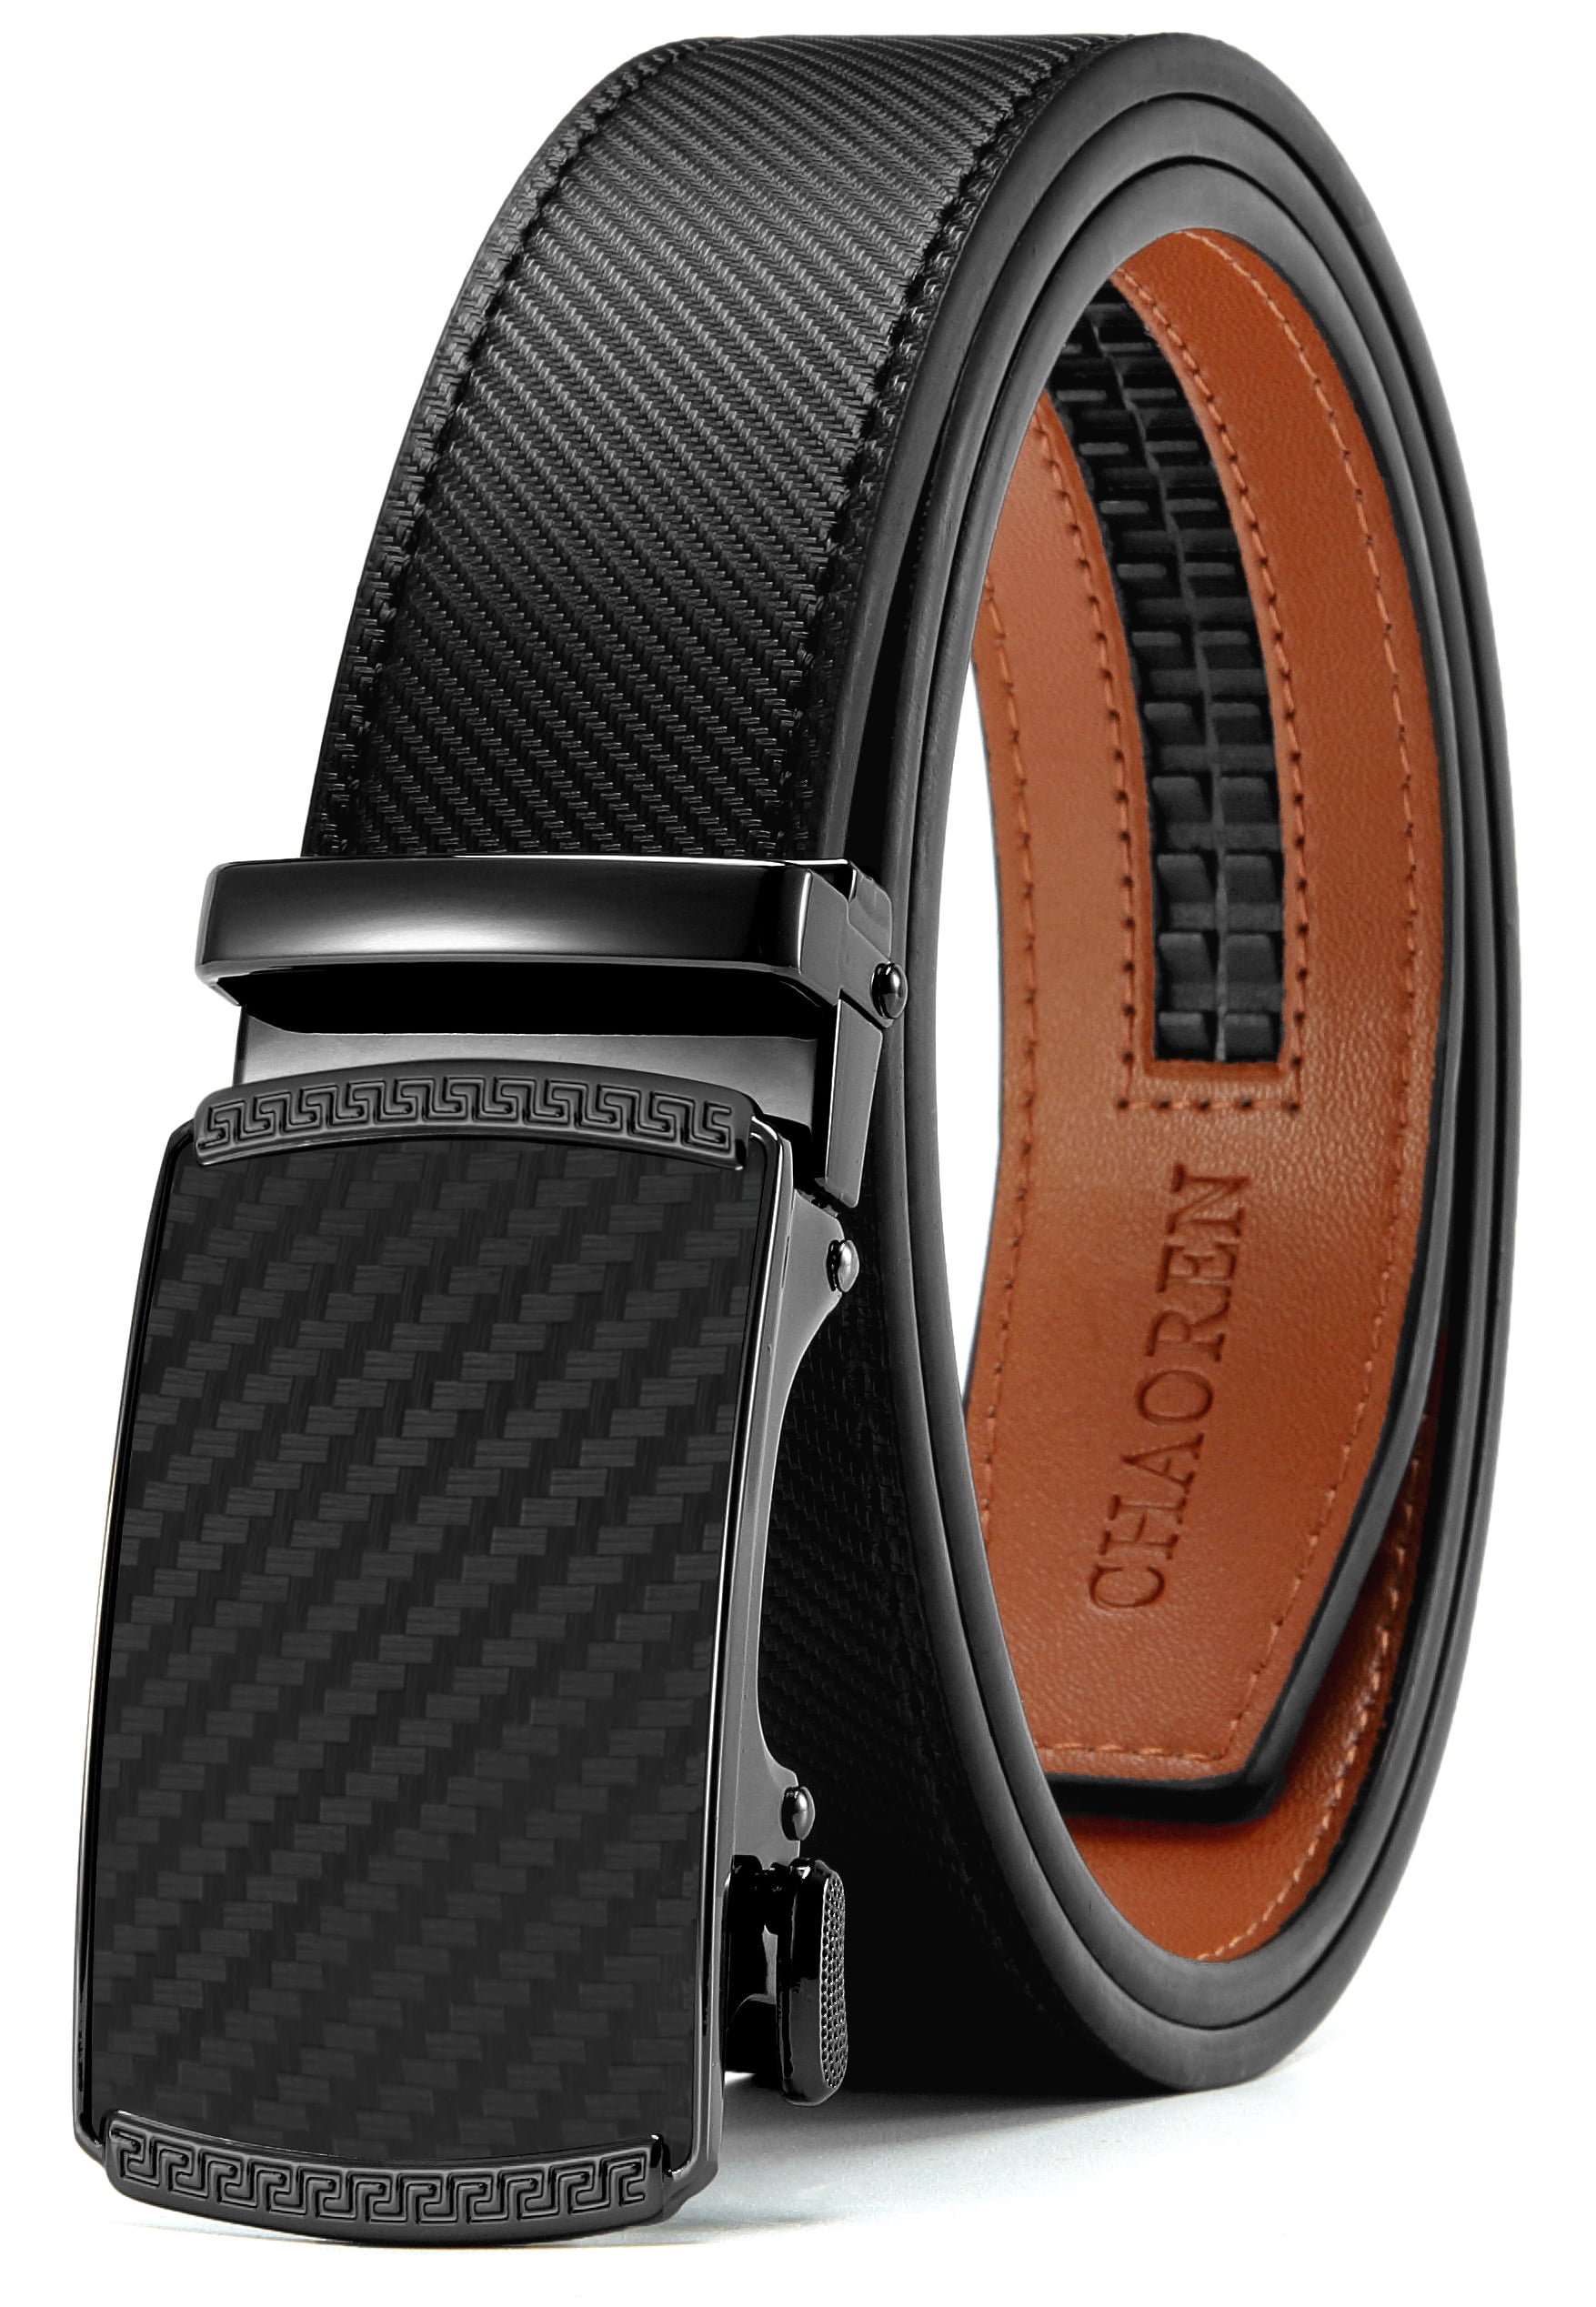 Salvatore Ferragamo smooth type Men's Leather Belt 34 - Black/Silver  buckle US+